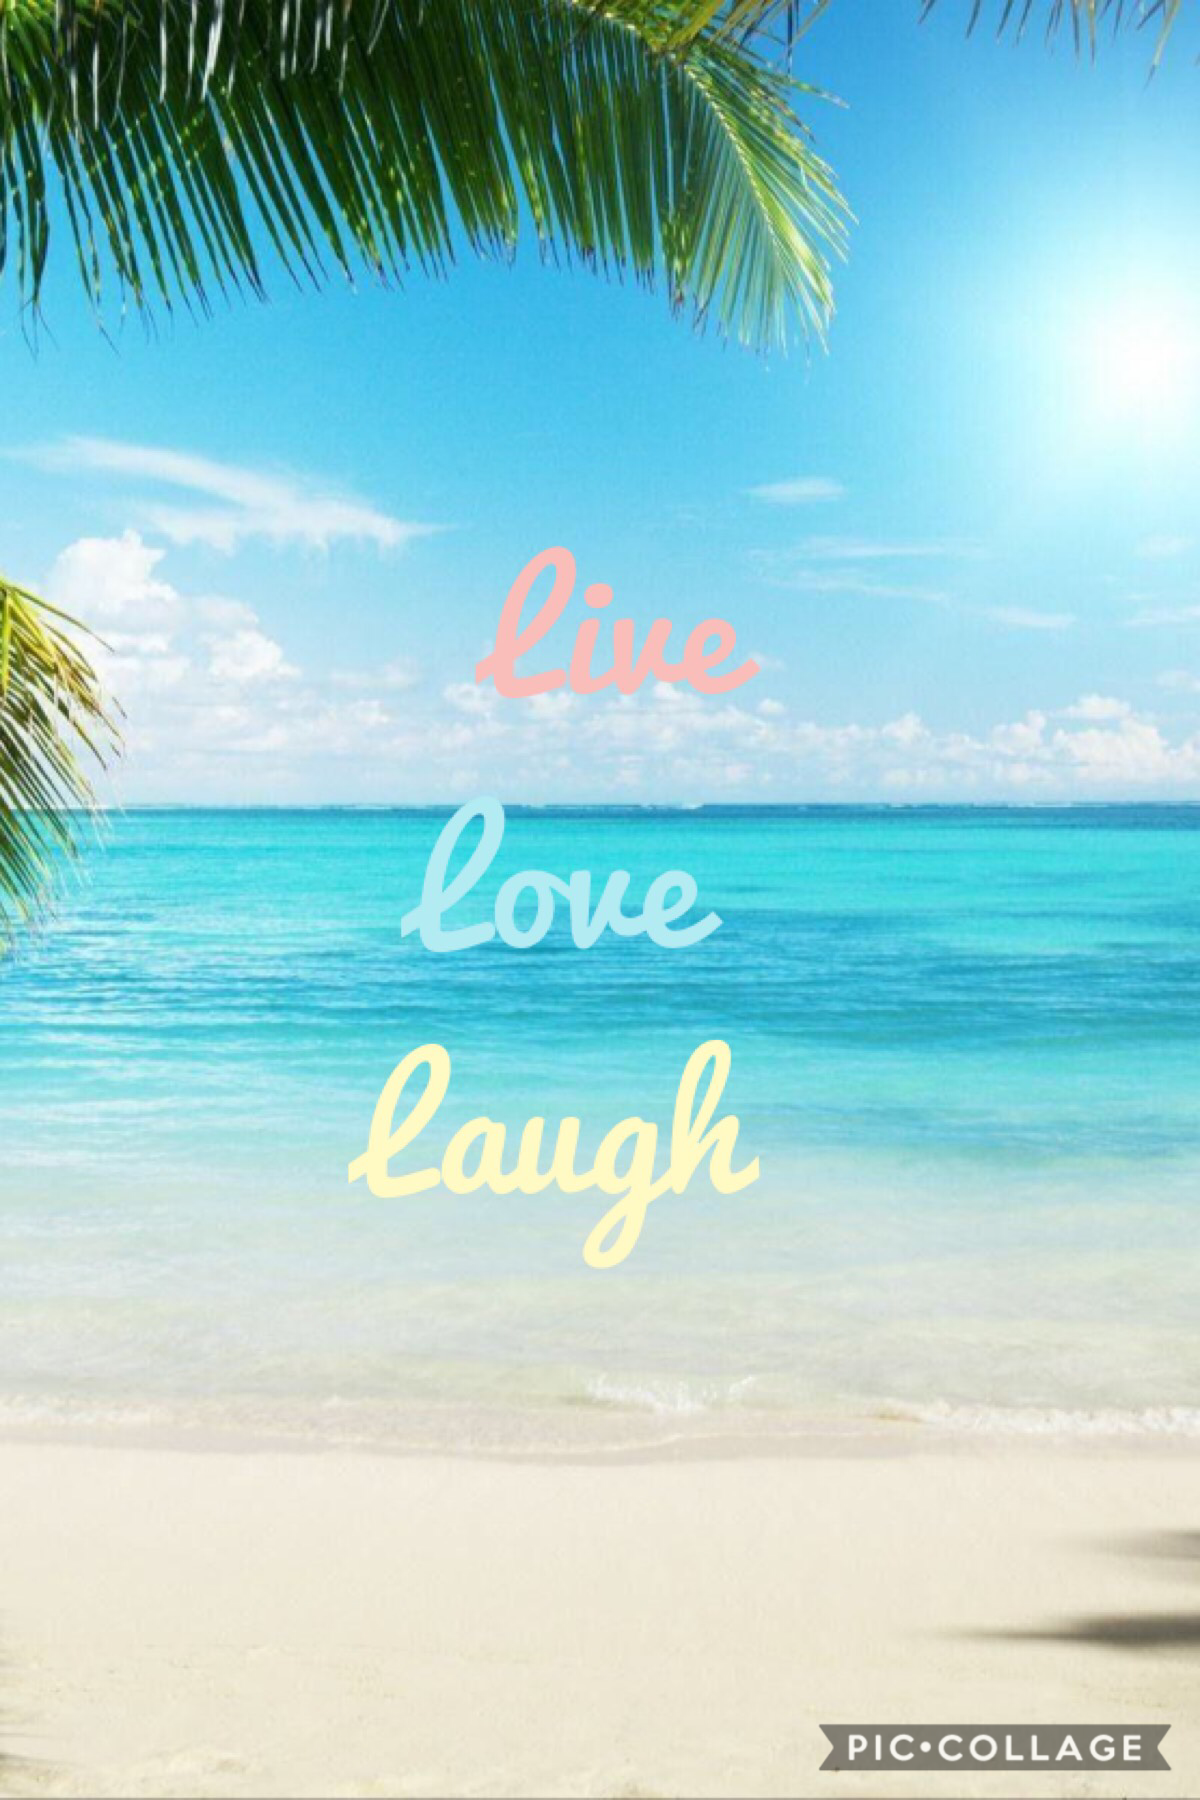 Live 
Love
Laugh